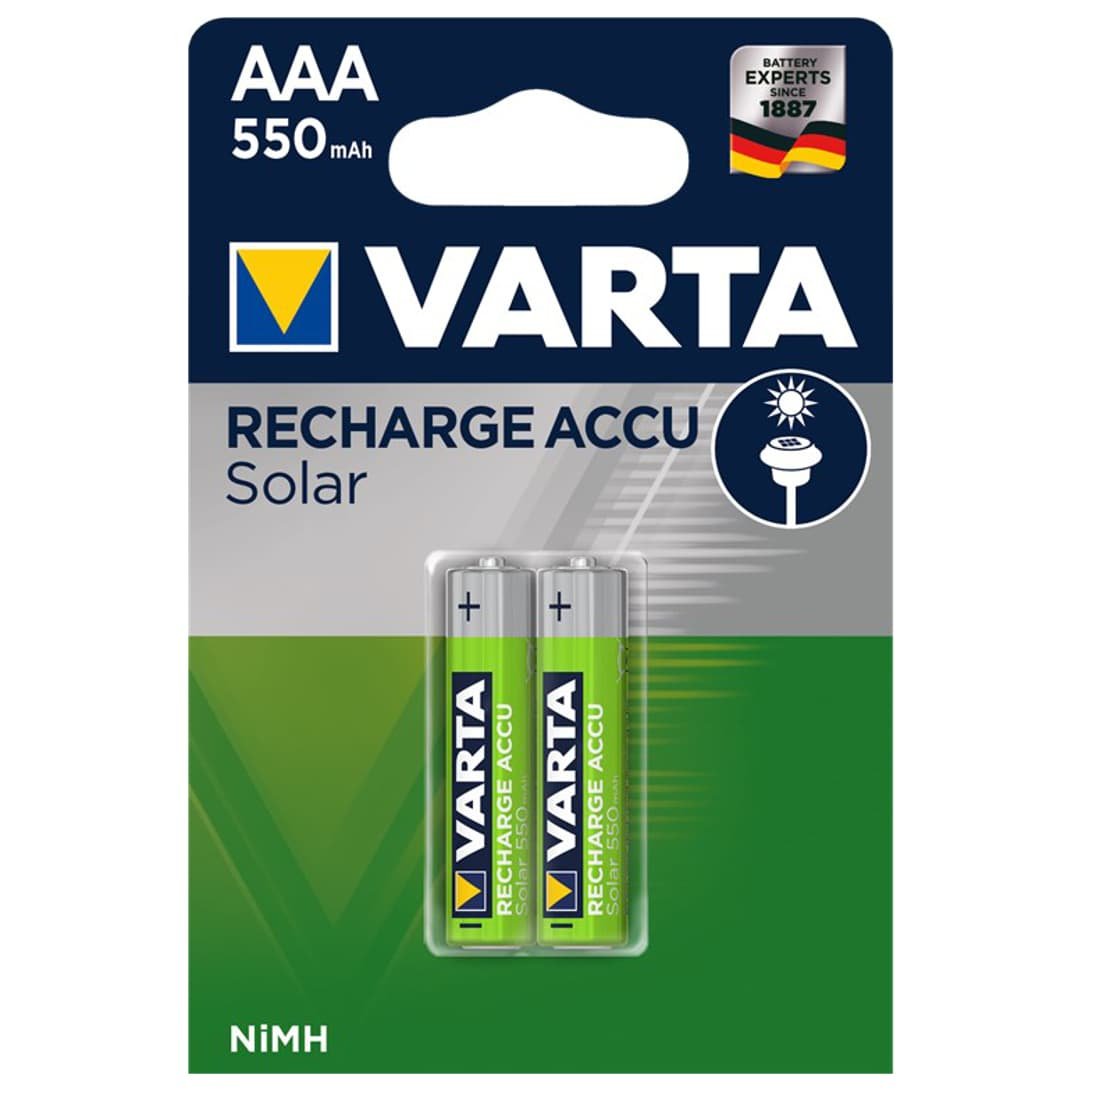 Se Varta Recharge Charge Accu Solar Aaa 550mah 2 Pack - Batteri hos PlusLED.dk